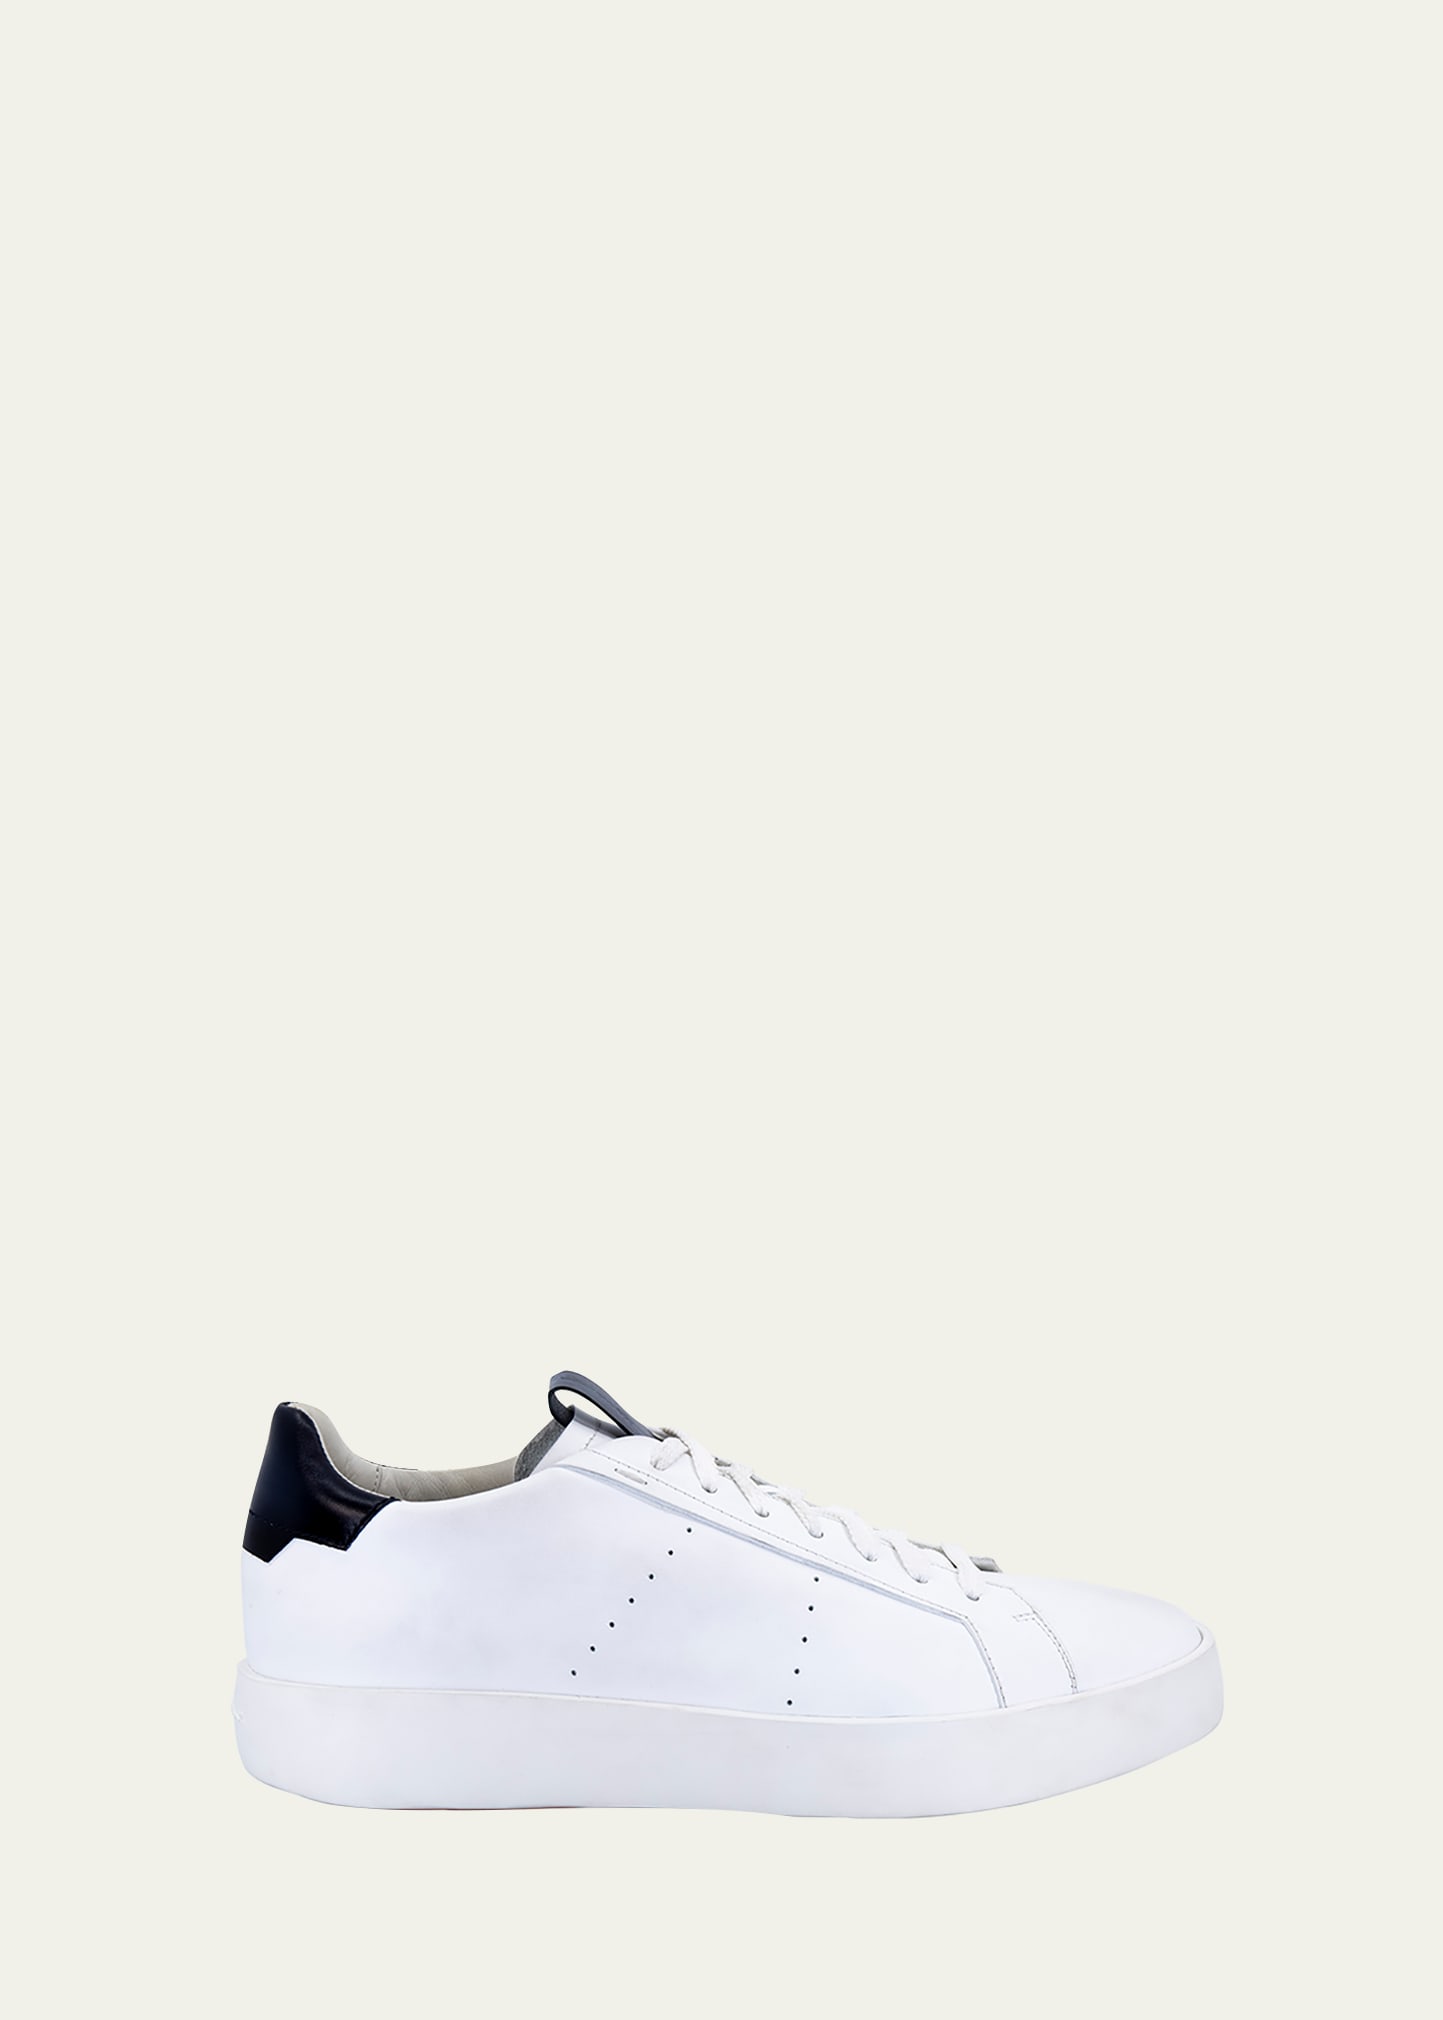 Santoni Men's Two-tone Leather Low-top Sneakers In White/navy | ModeSens